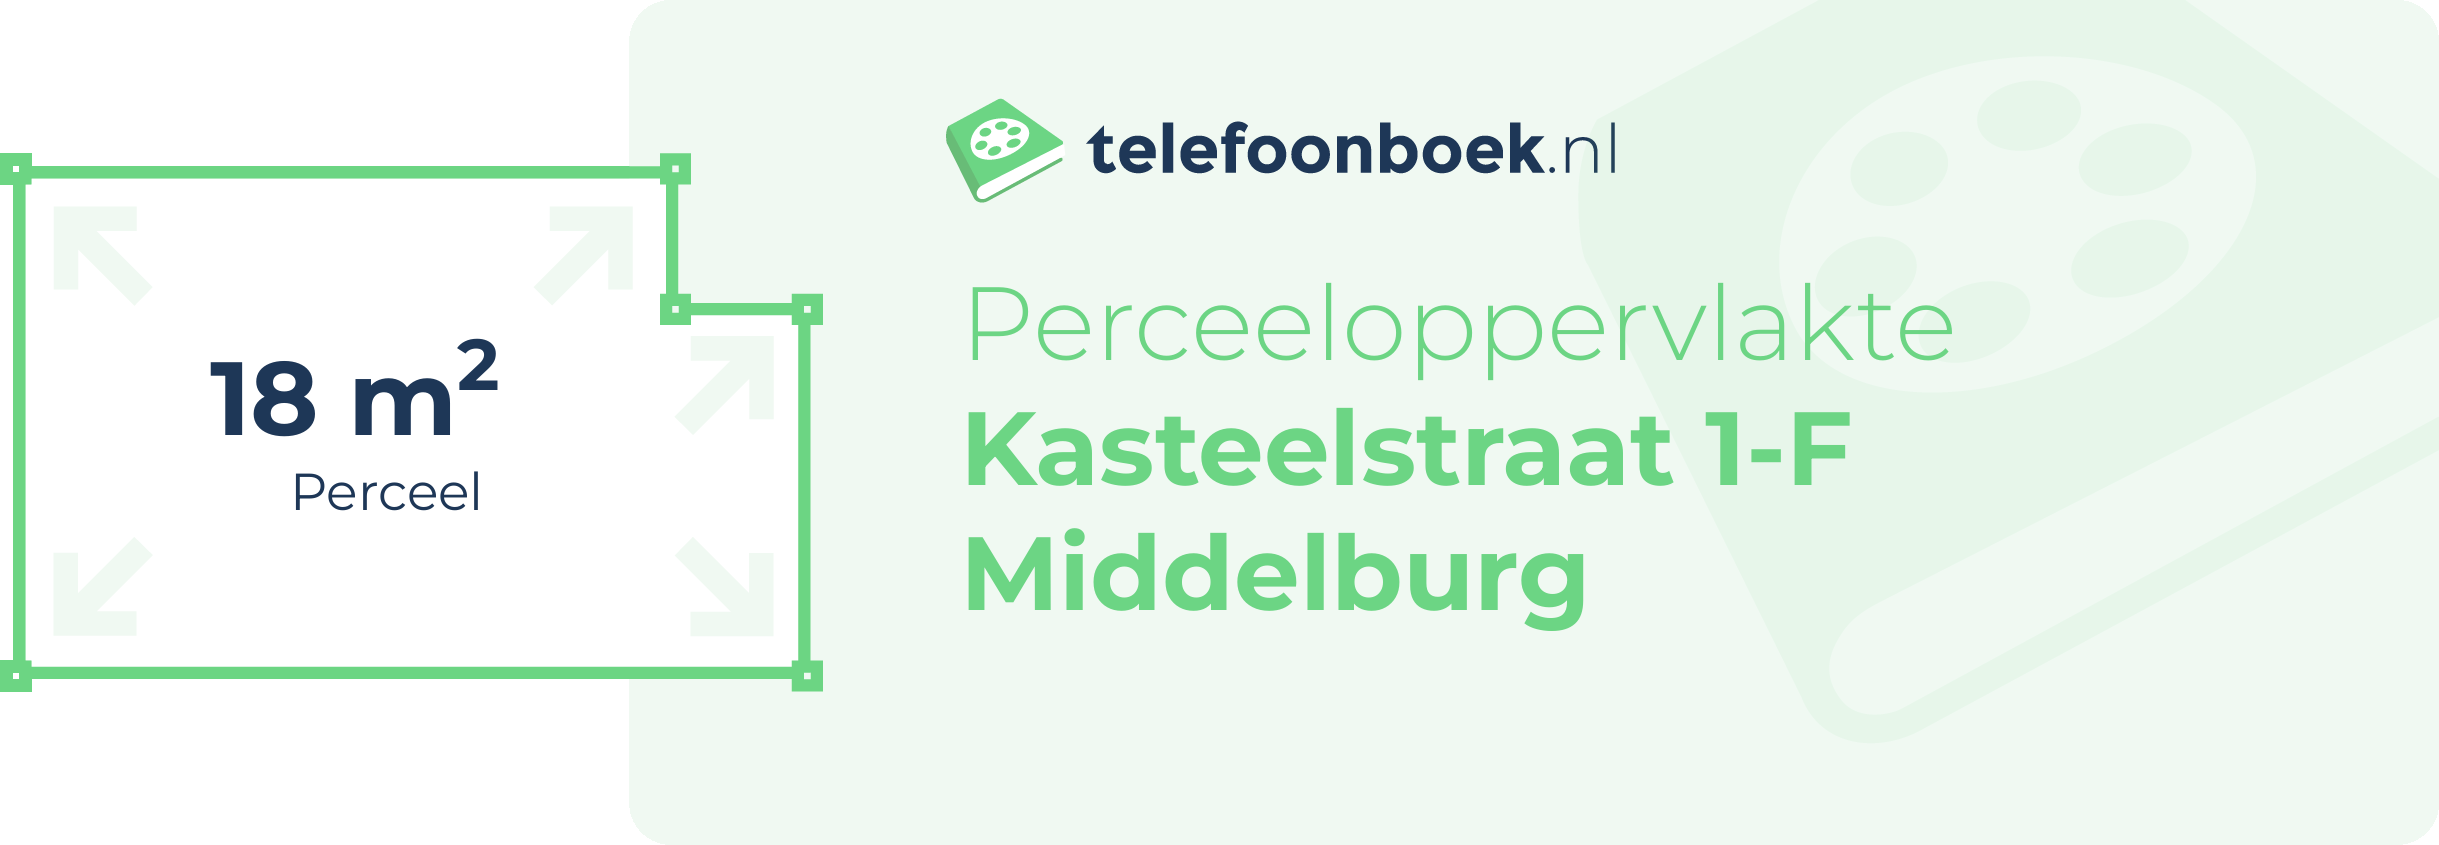 Perceeloppervlakte Kasteelstraat 1-F Middelburg